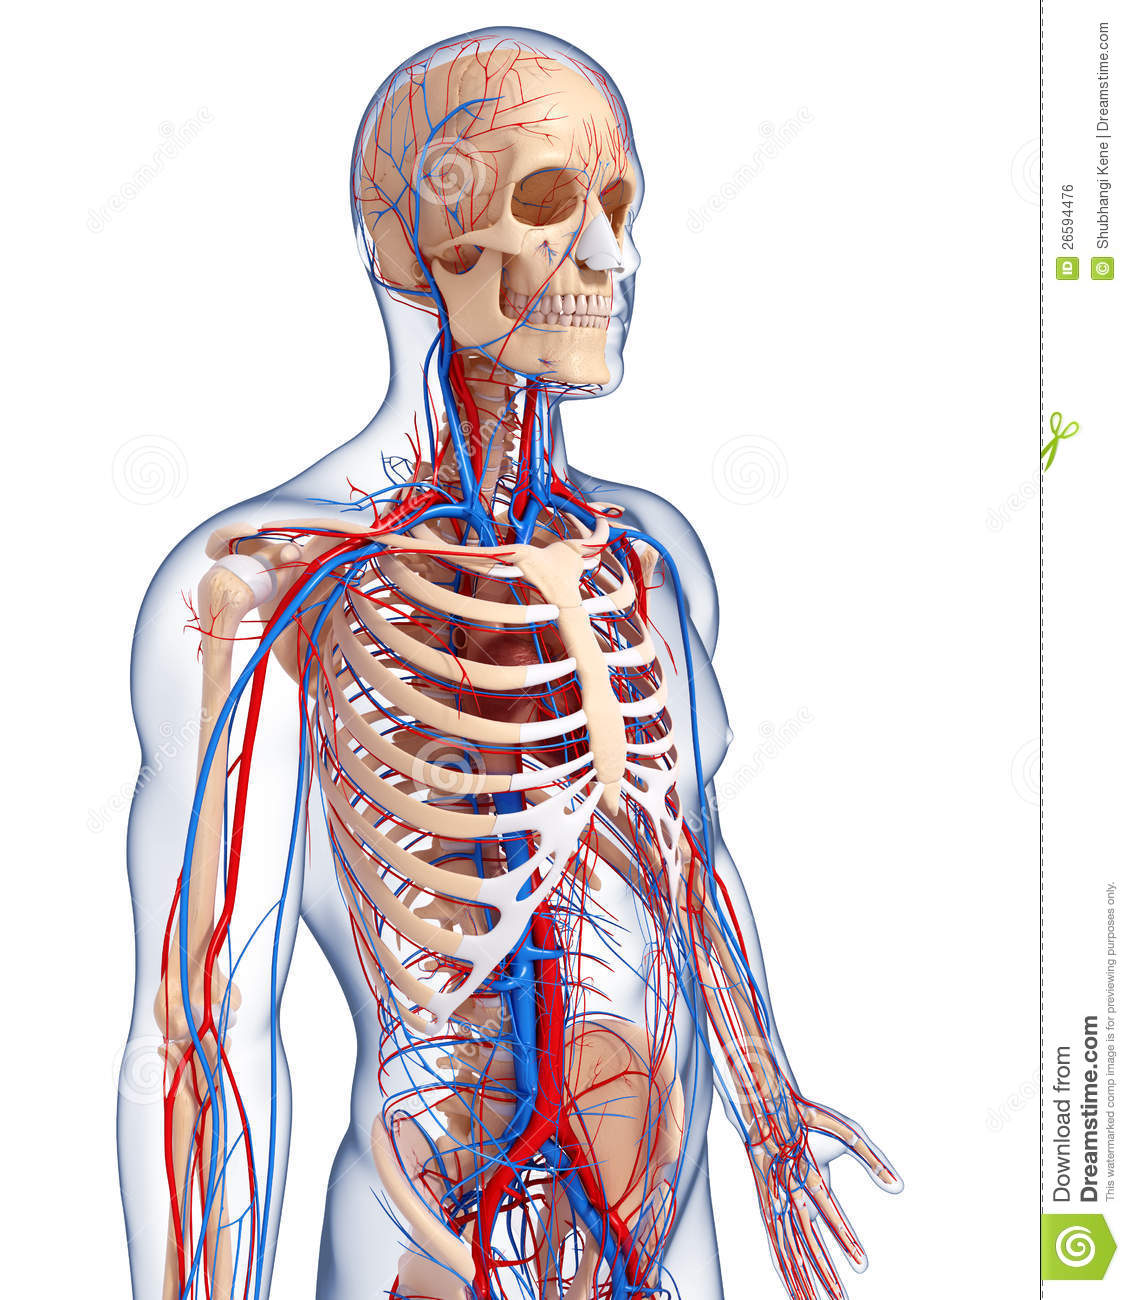 Anatomy Of Male Body Circulatory System Royalty Free Stock Image    